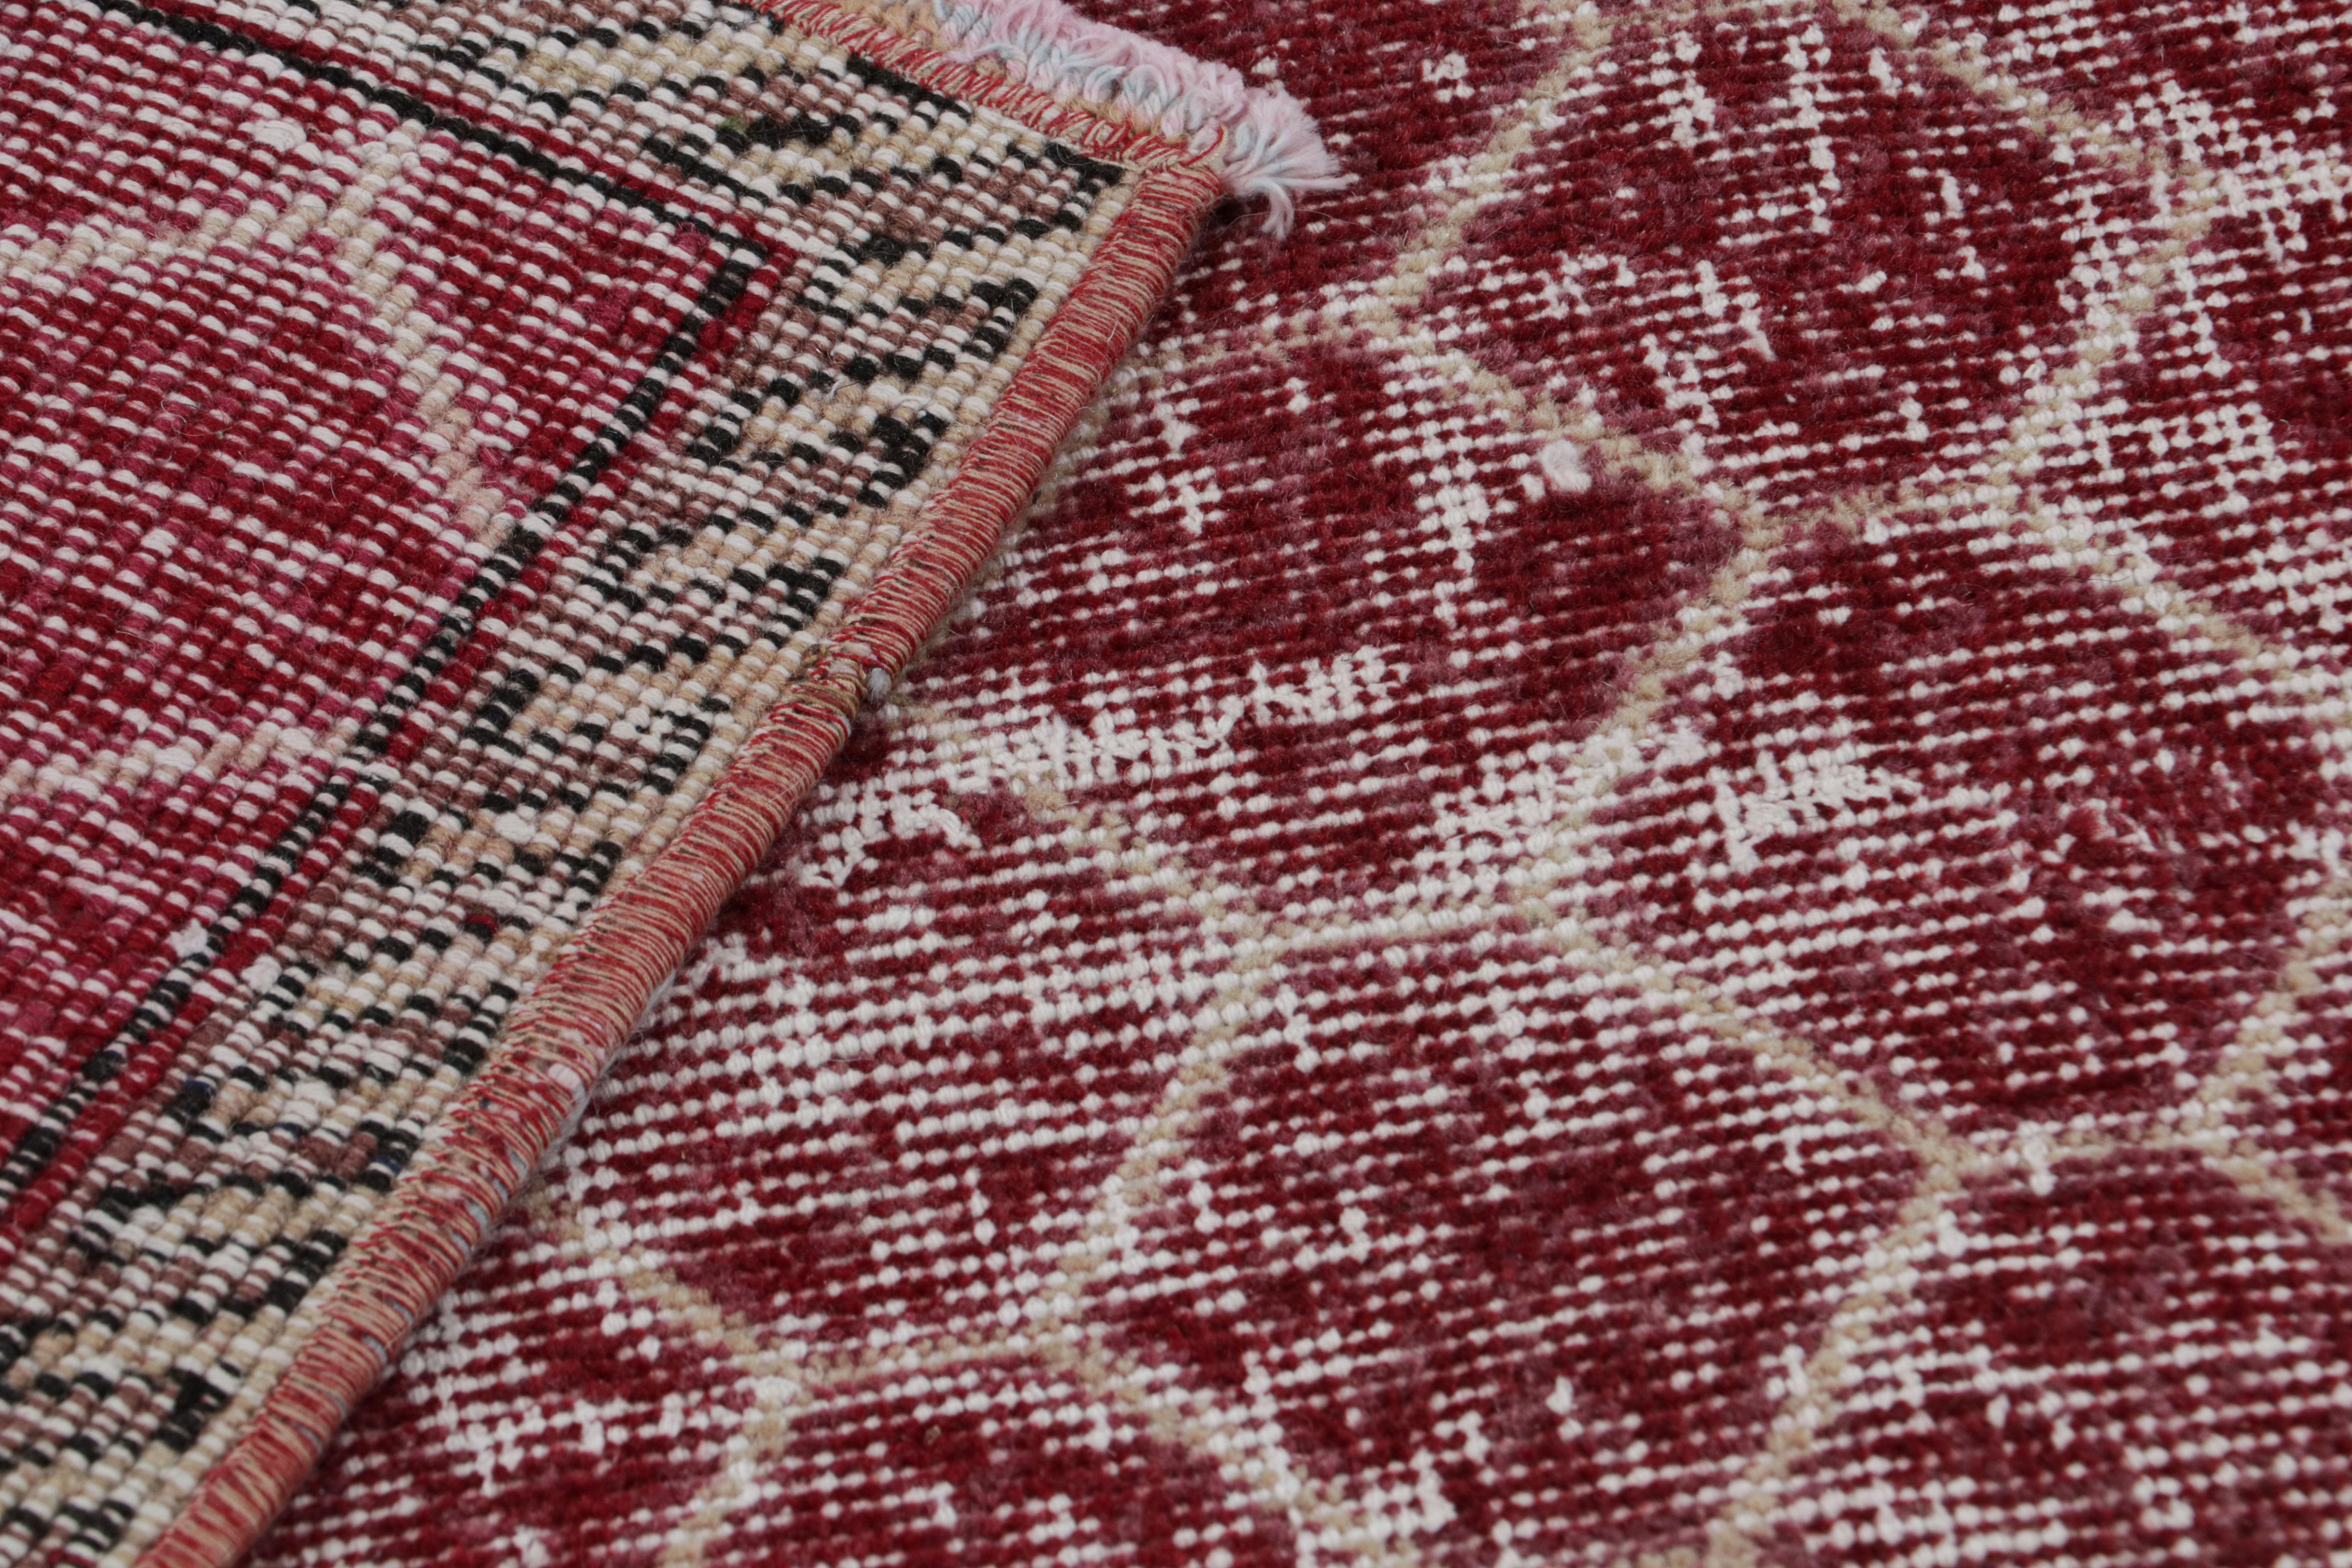 Wool Vintage Zeki Müren Rug in Burgundy with Geometric Patterns, from Rug & Kilim For Sale